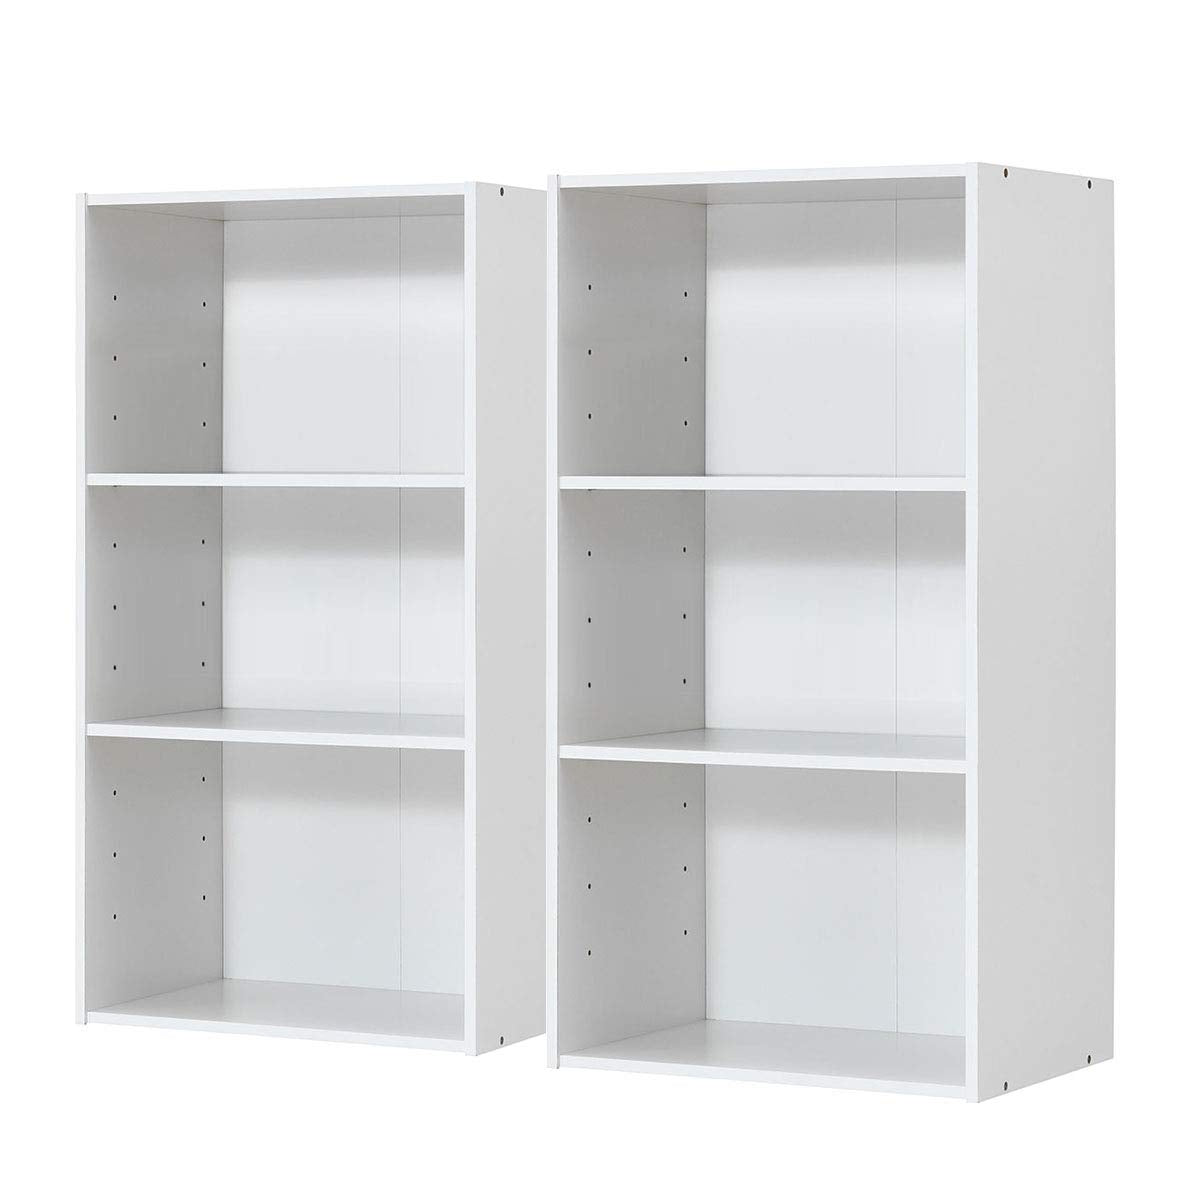 3 Shelf Bookcase Book Shelves Open Storage Cabinet